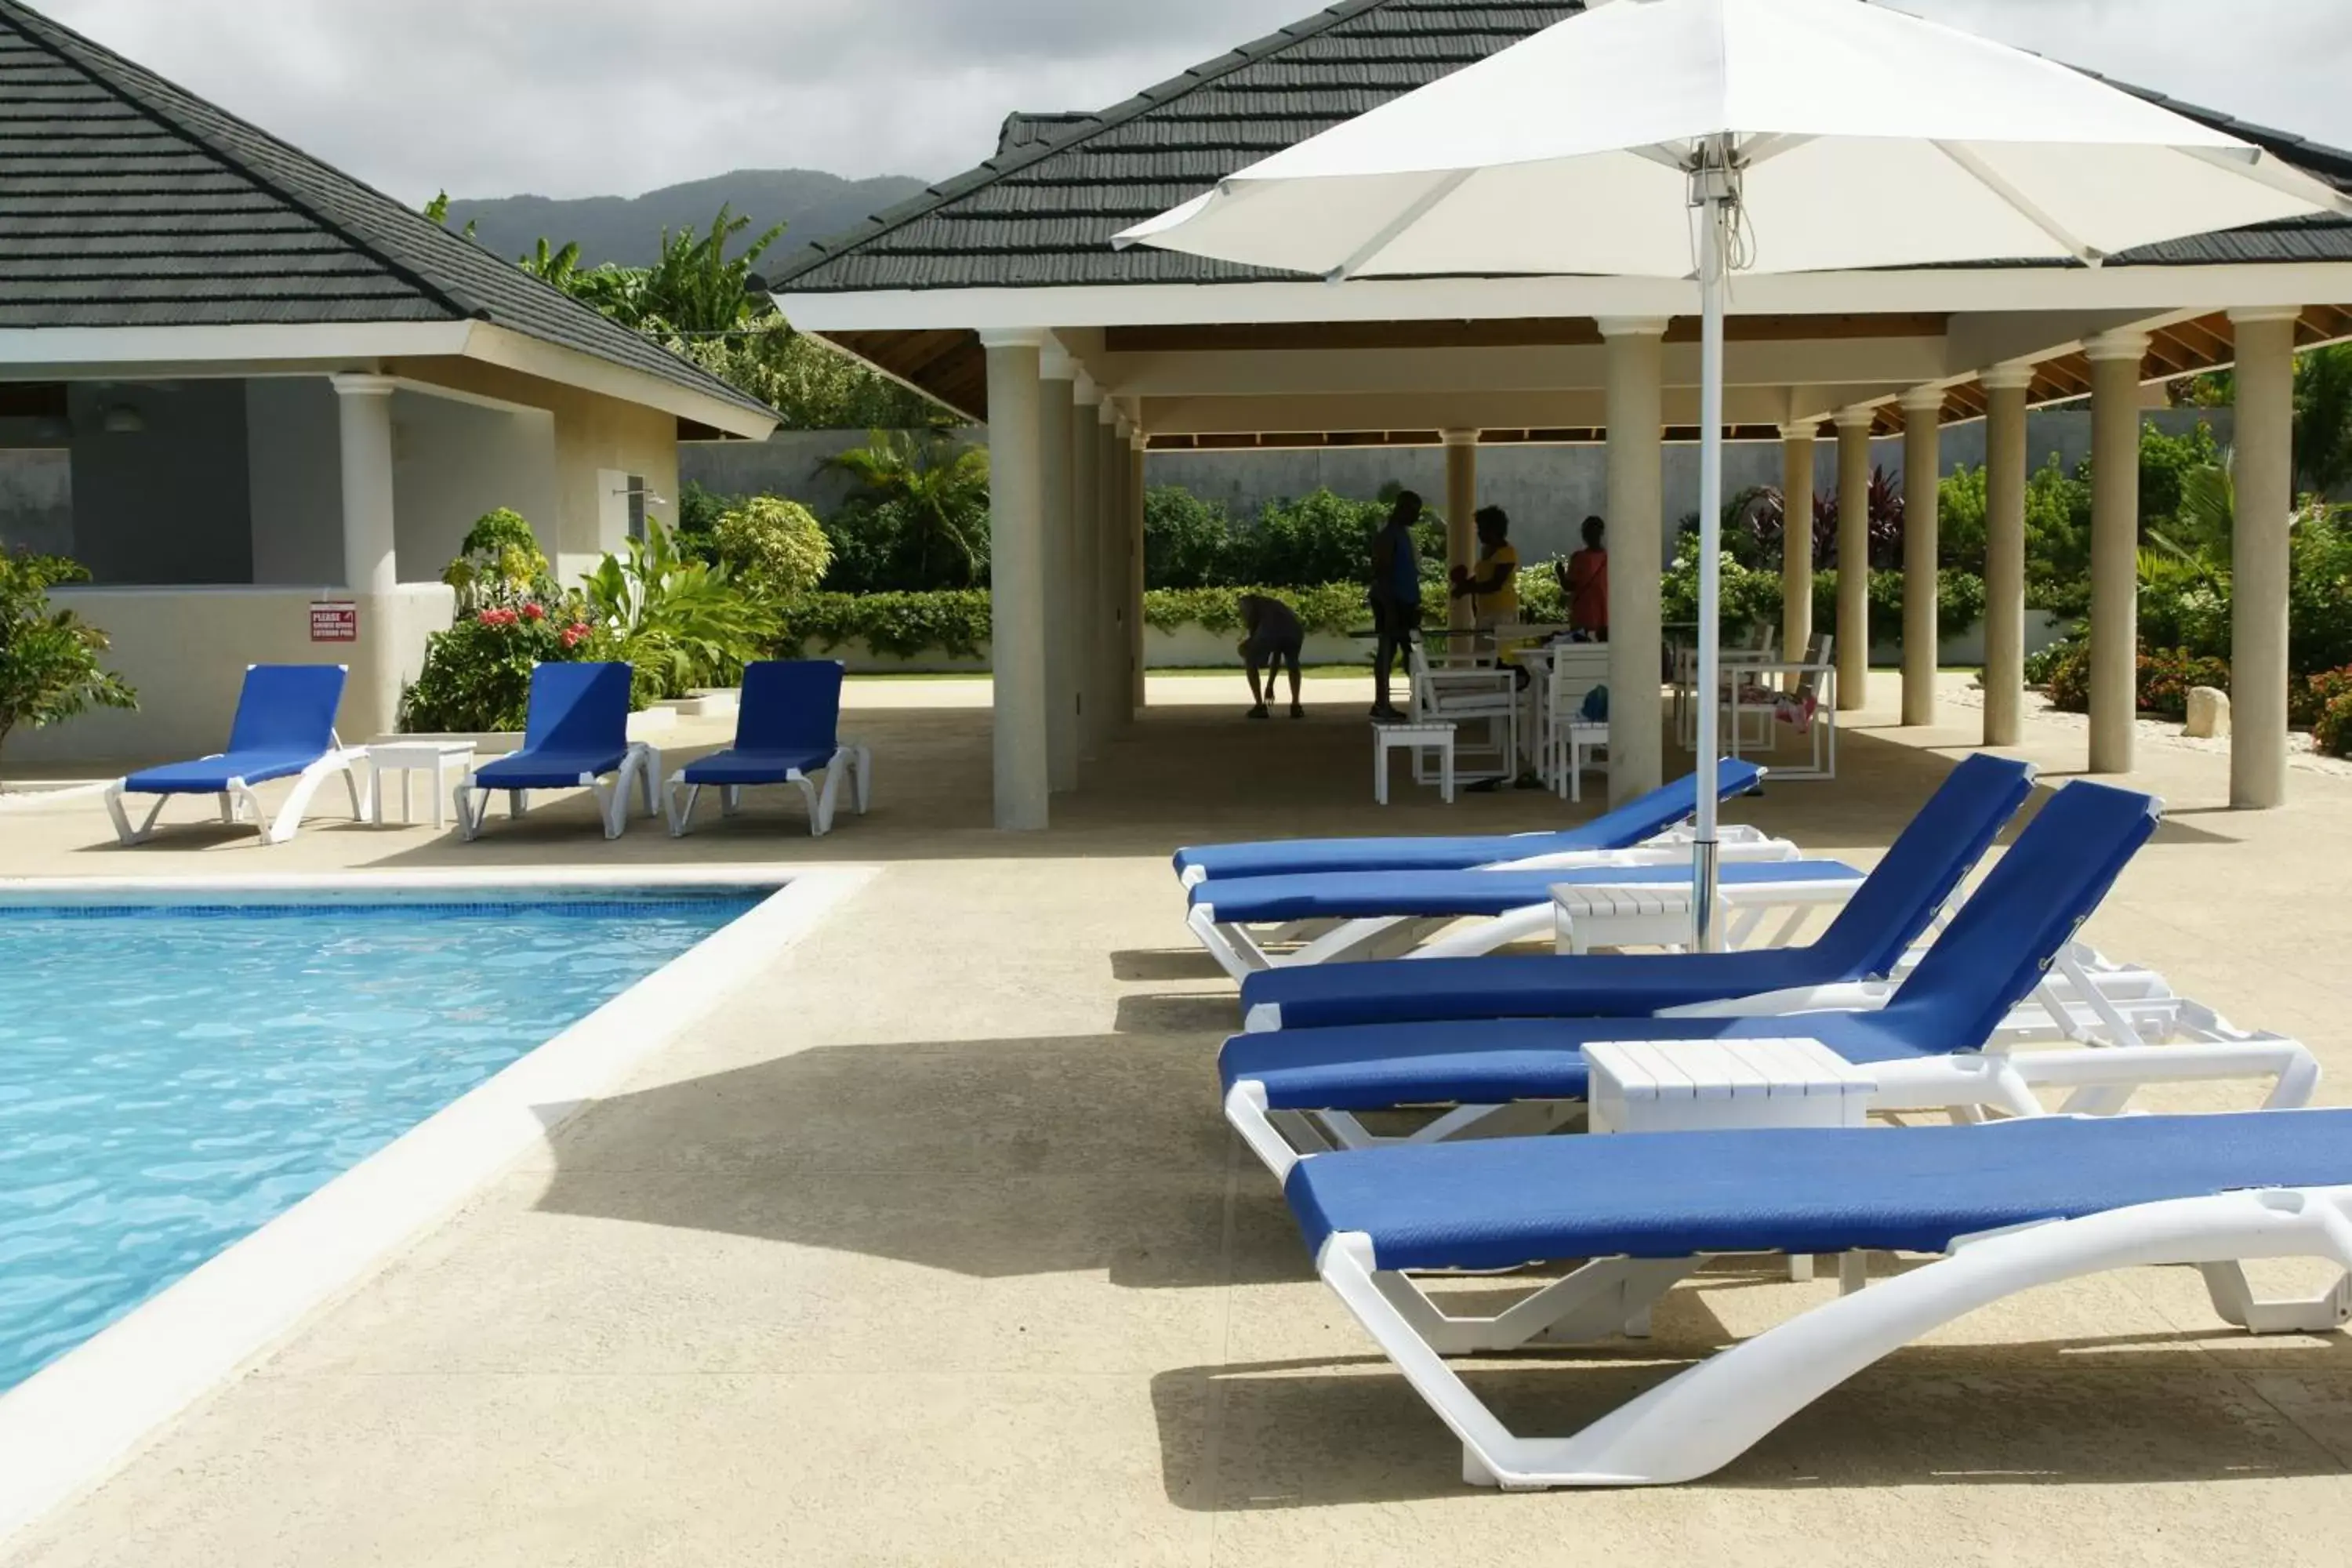 Swimming Pool in Jamnick Vacation Rentals - Richmond, St Ann, Jamaica